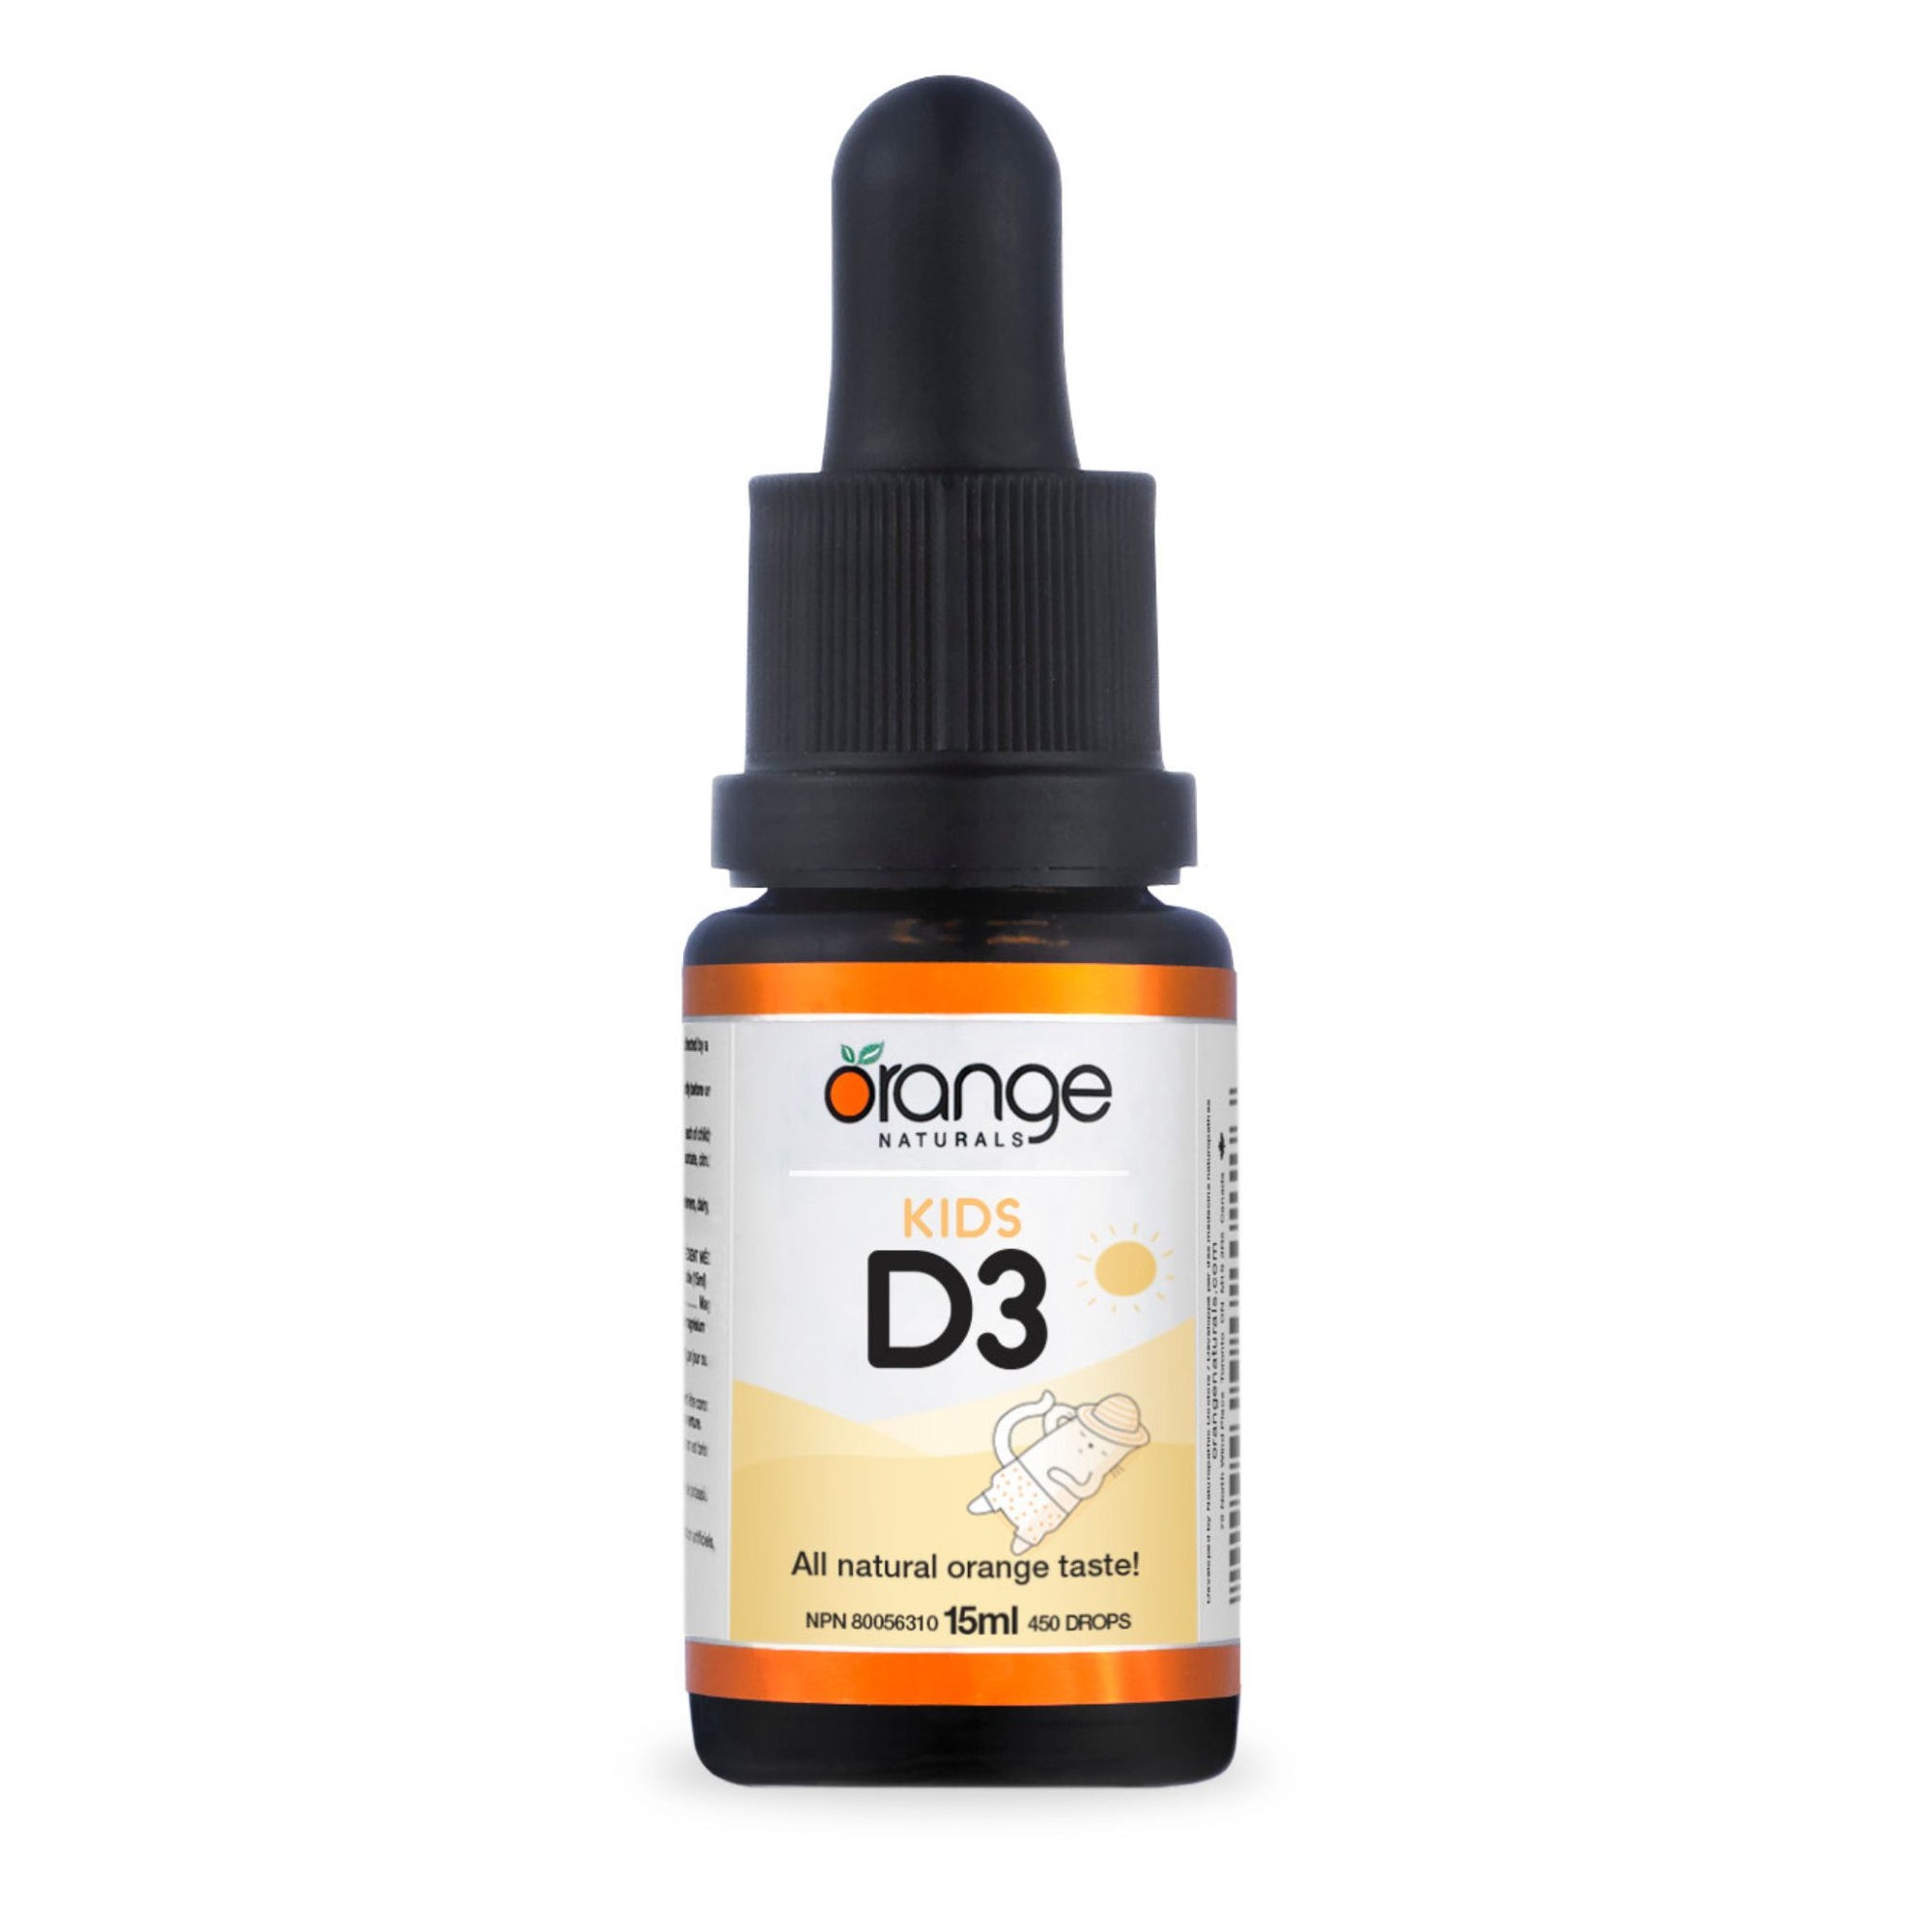 Orange Naturals Kids D3 Drops 15mL Bottle - All natural orange taste! 400IU vitamin D3 per serving. 